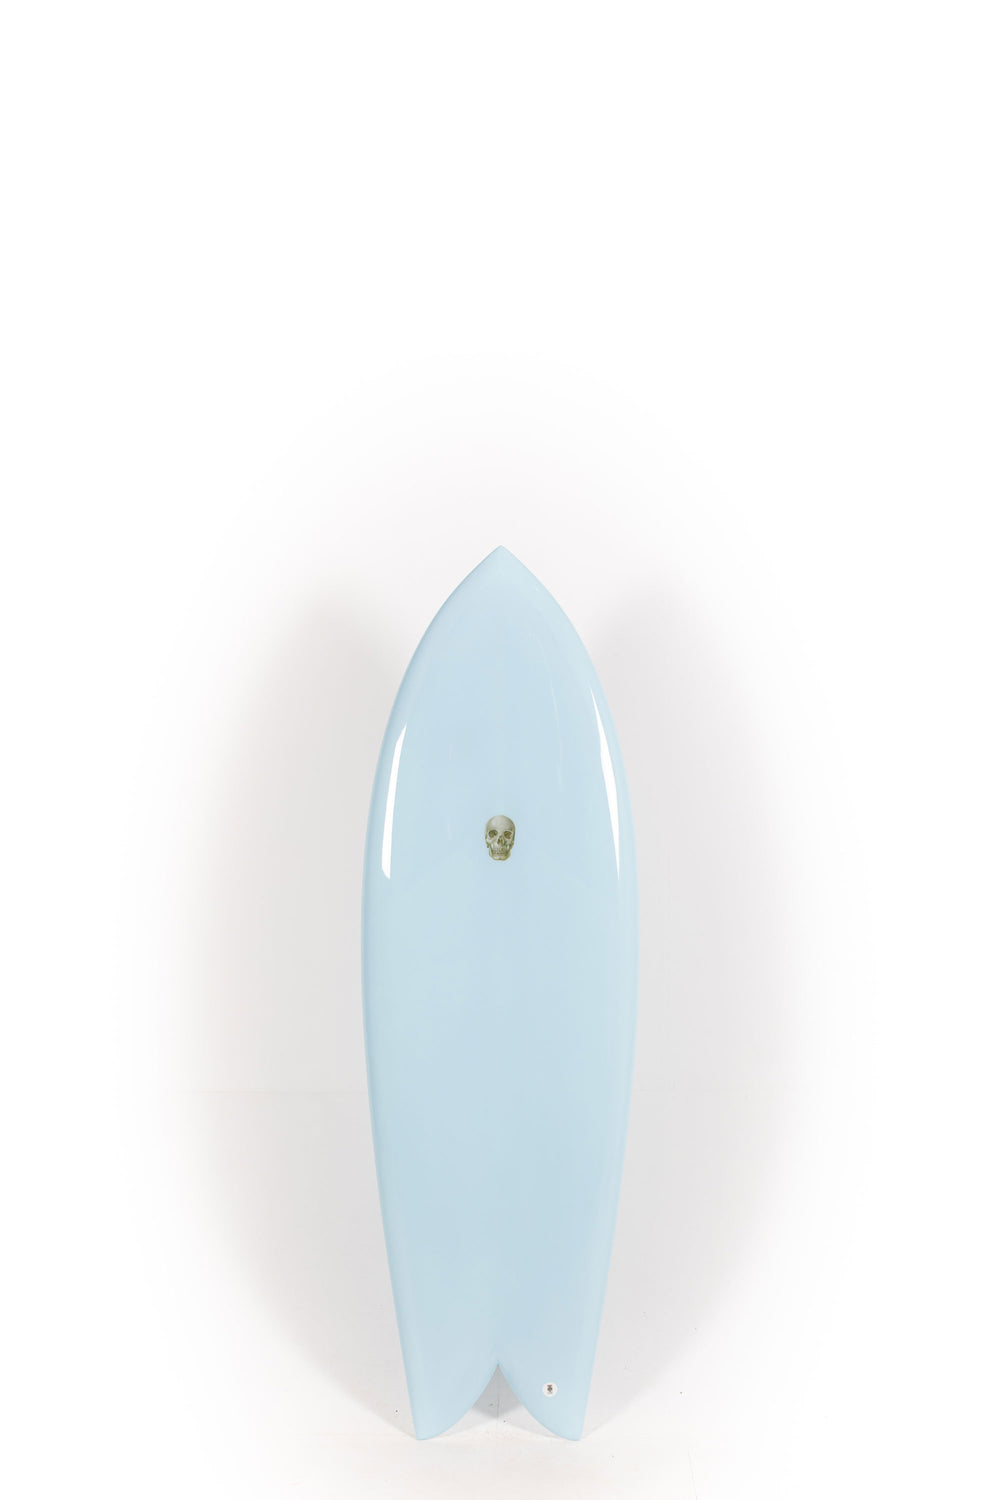 Pukas Surf Shop - Christenson Surfboards - CHRIS FISH - 5'7